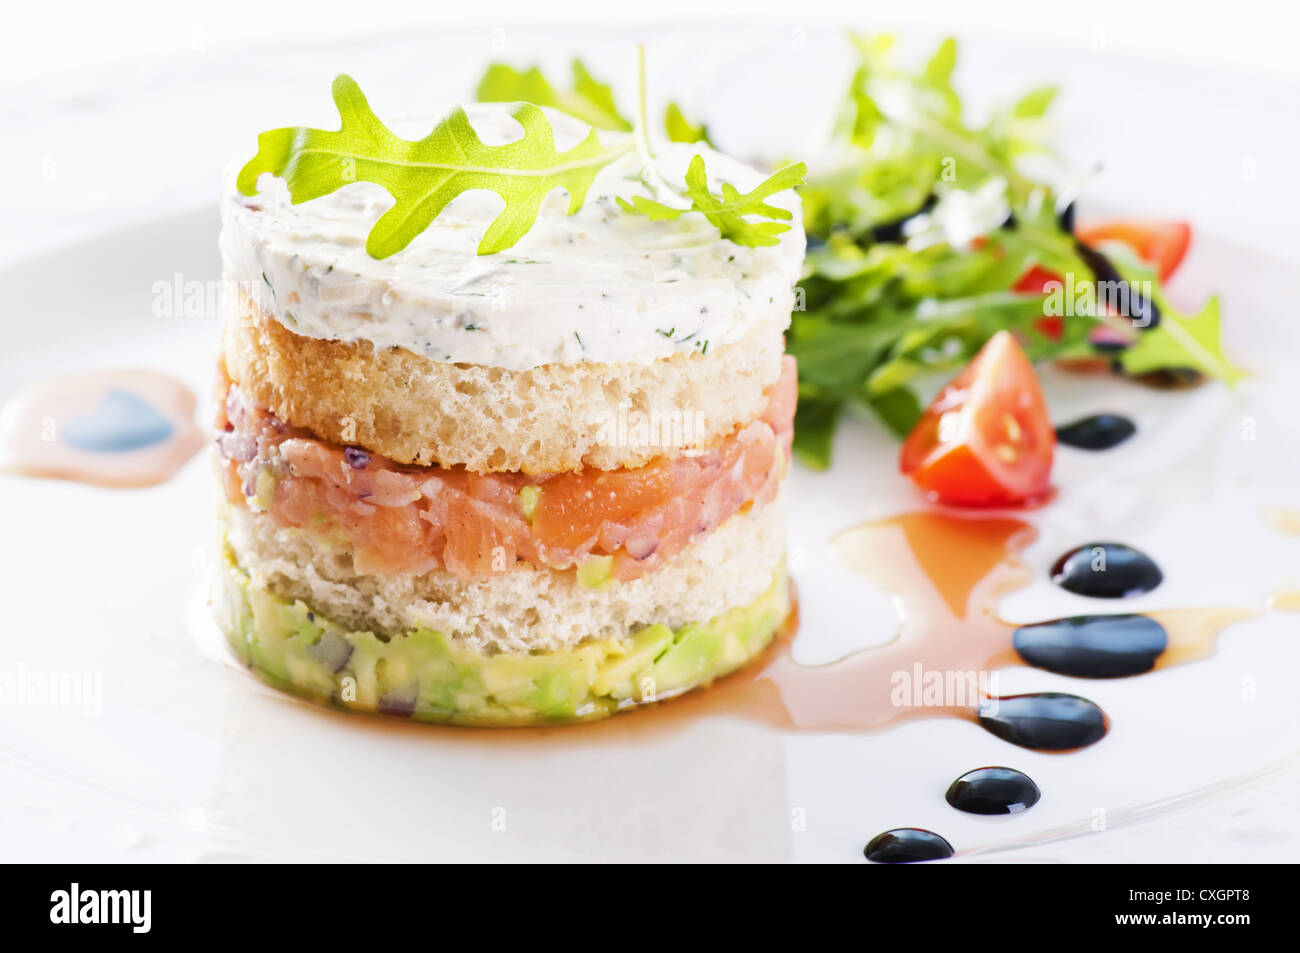 Starter with salmon tartare and salad Stock Photo